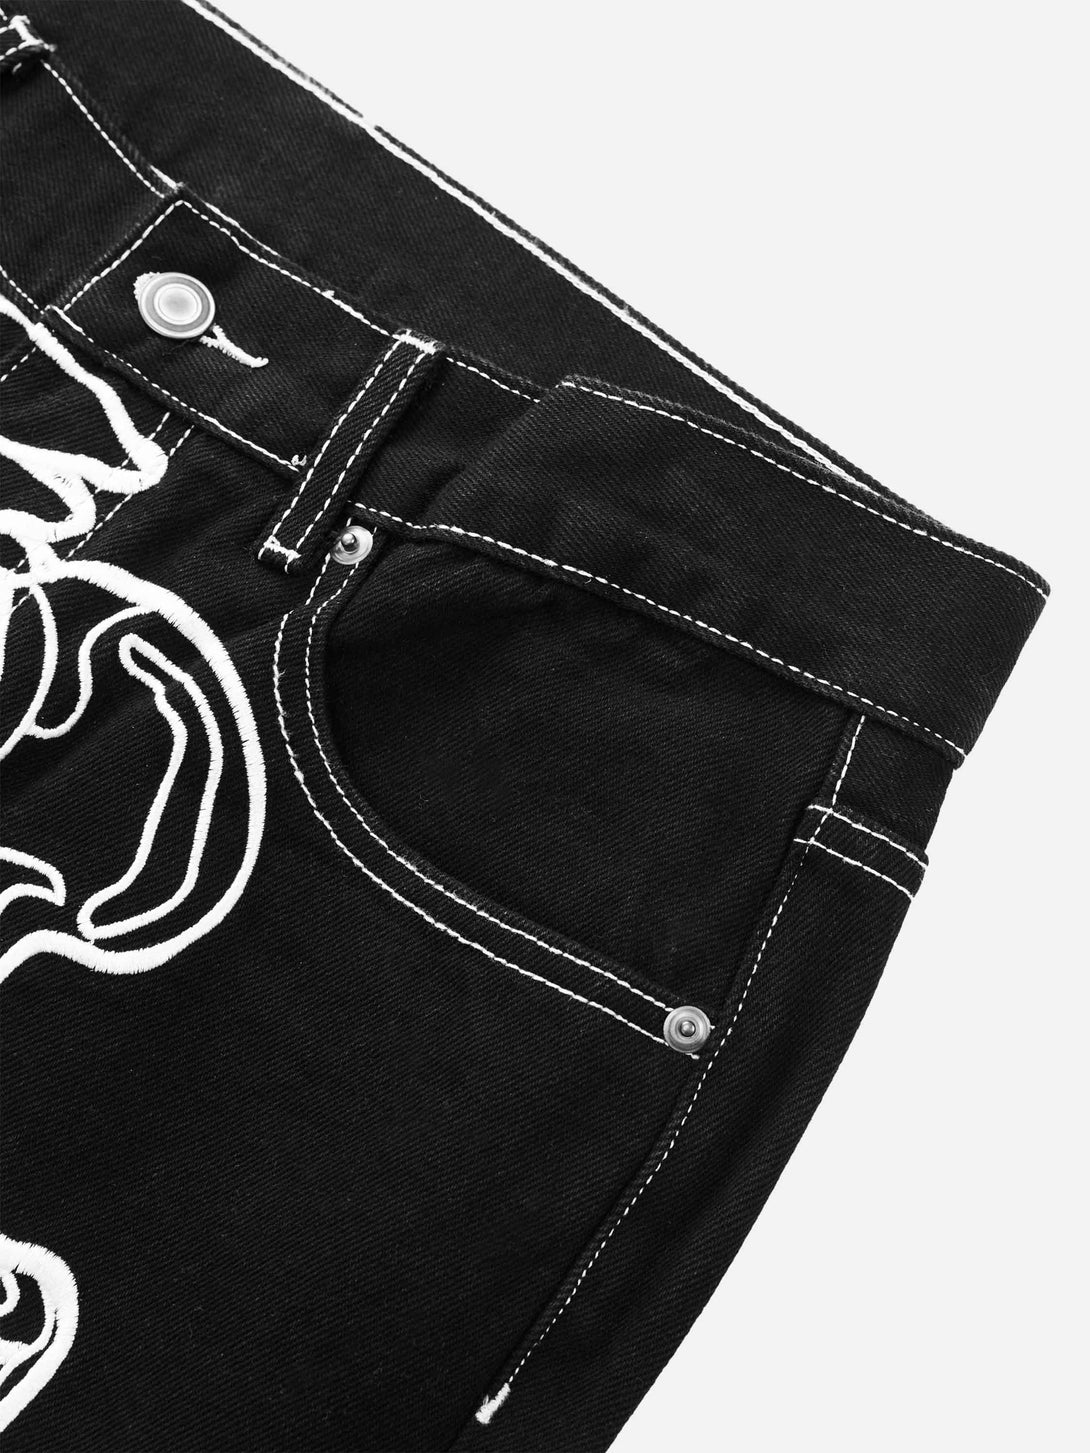 Majesda® - Hip Hop Bones Embroidered Jeans - 1859- Outfit Ideas - Streetwear Fashion - majesda.com